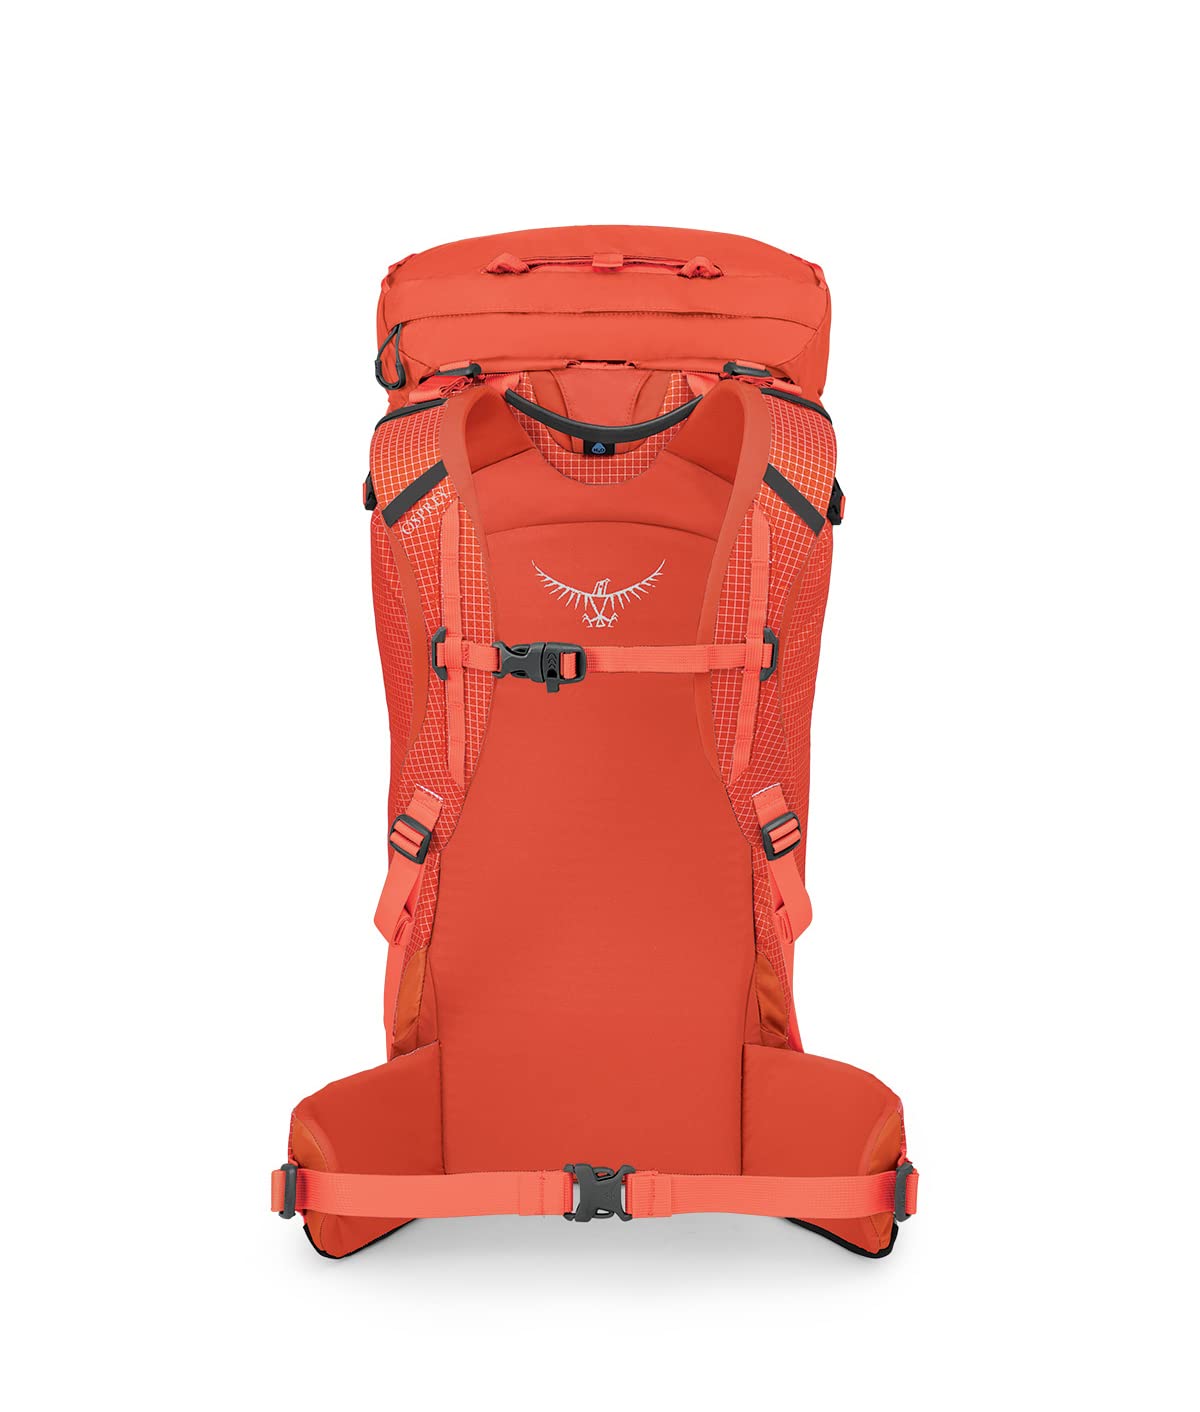 Osprey Mutant 38 Climbing and Mountaineering Backpack, Mars Orange, Medium/Large